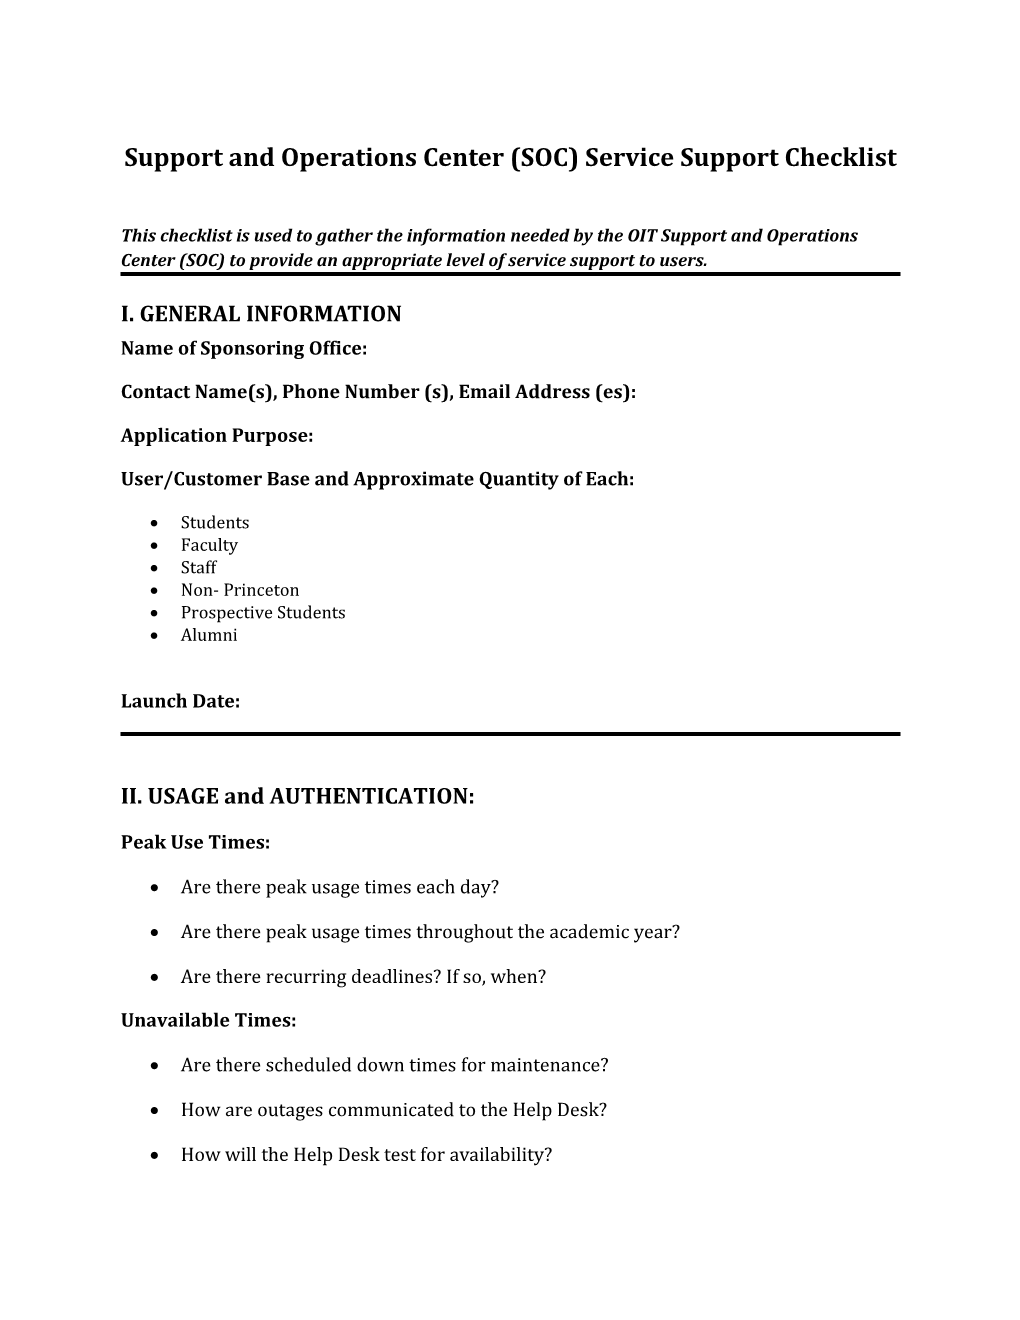 SOC Service Support Checklist